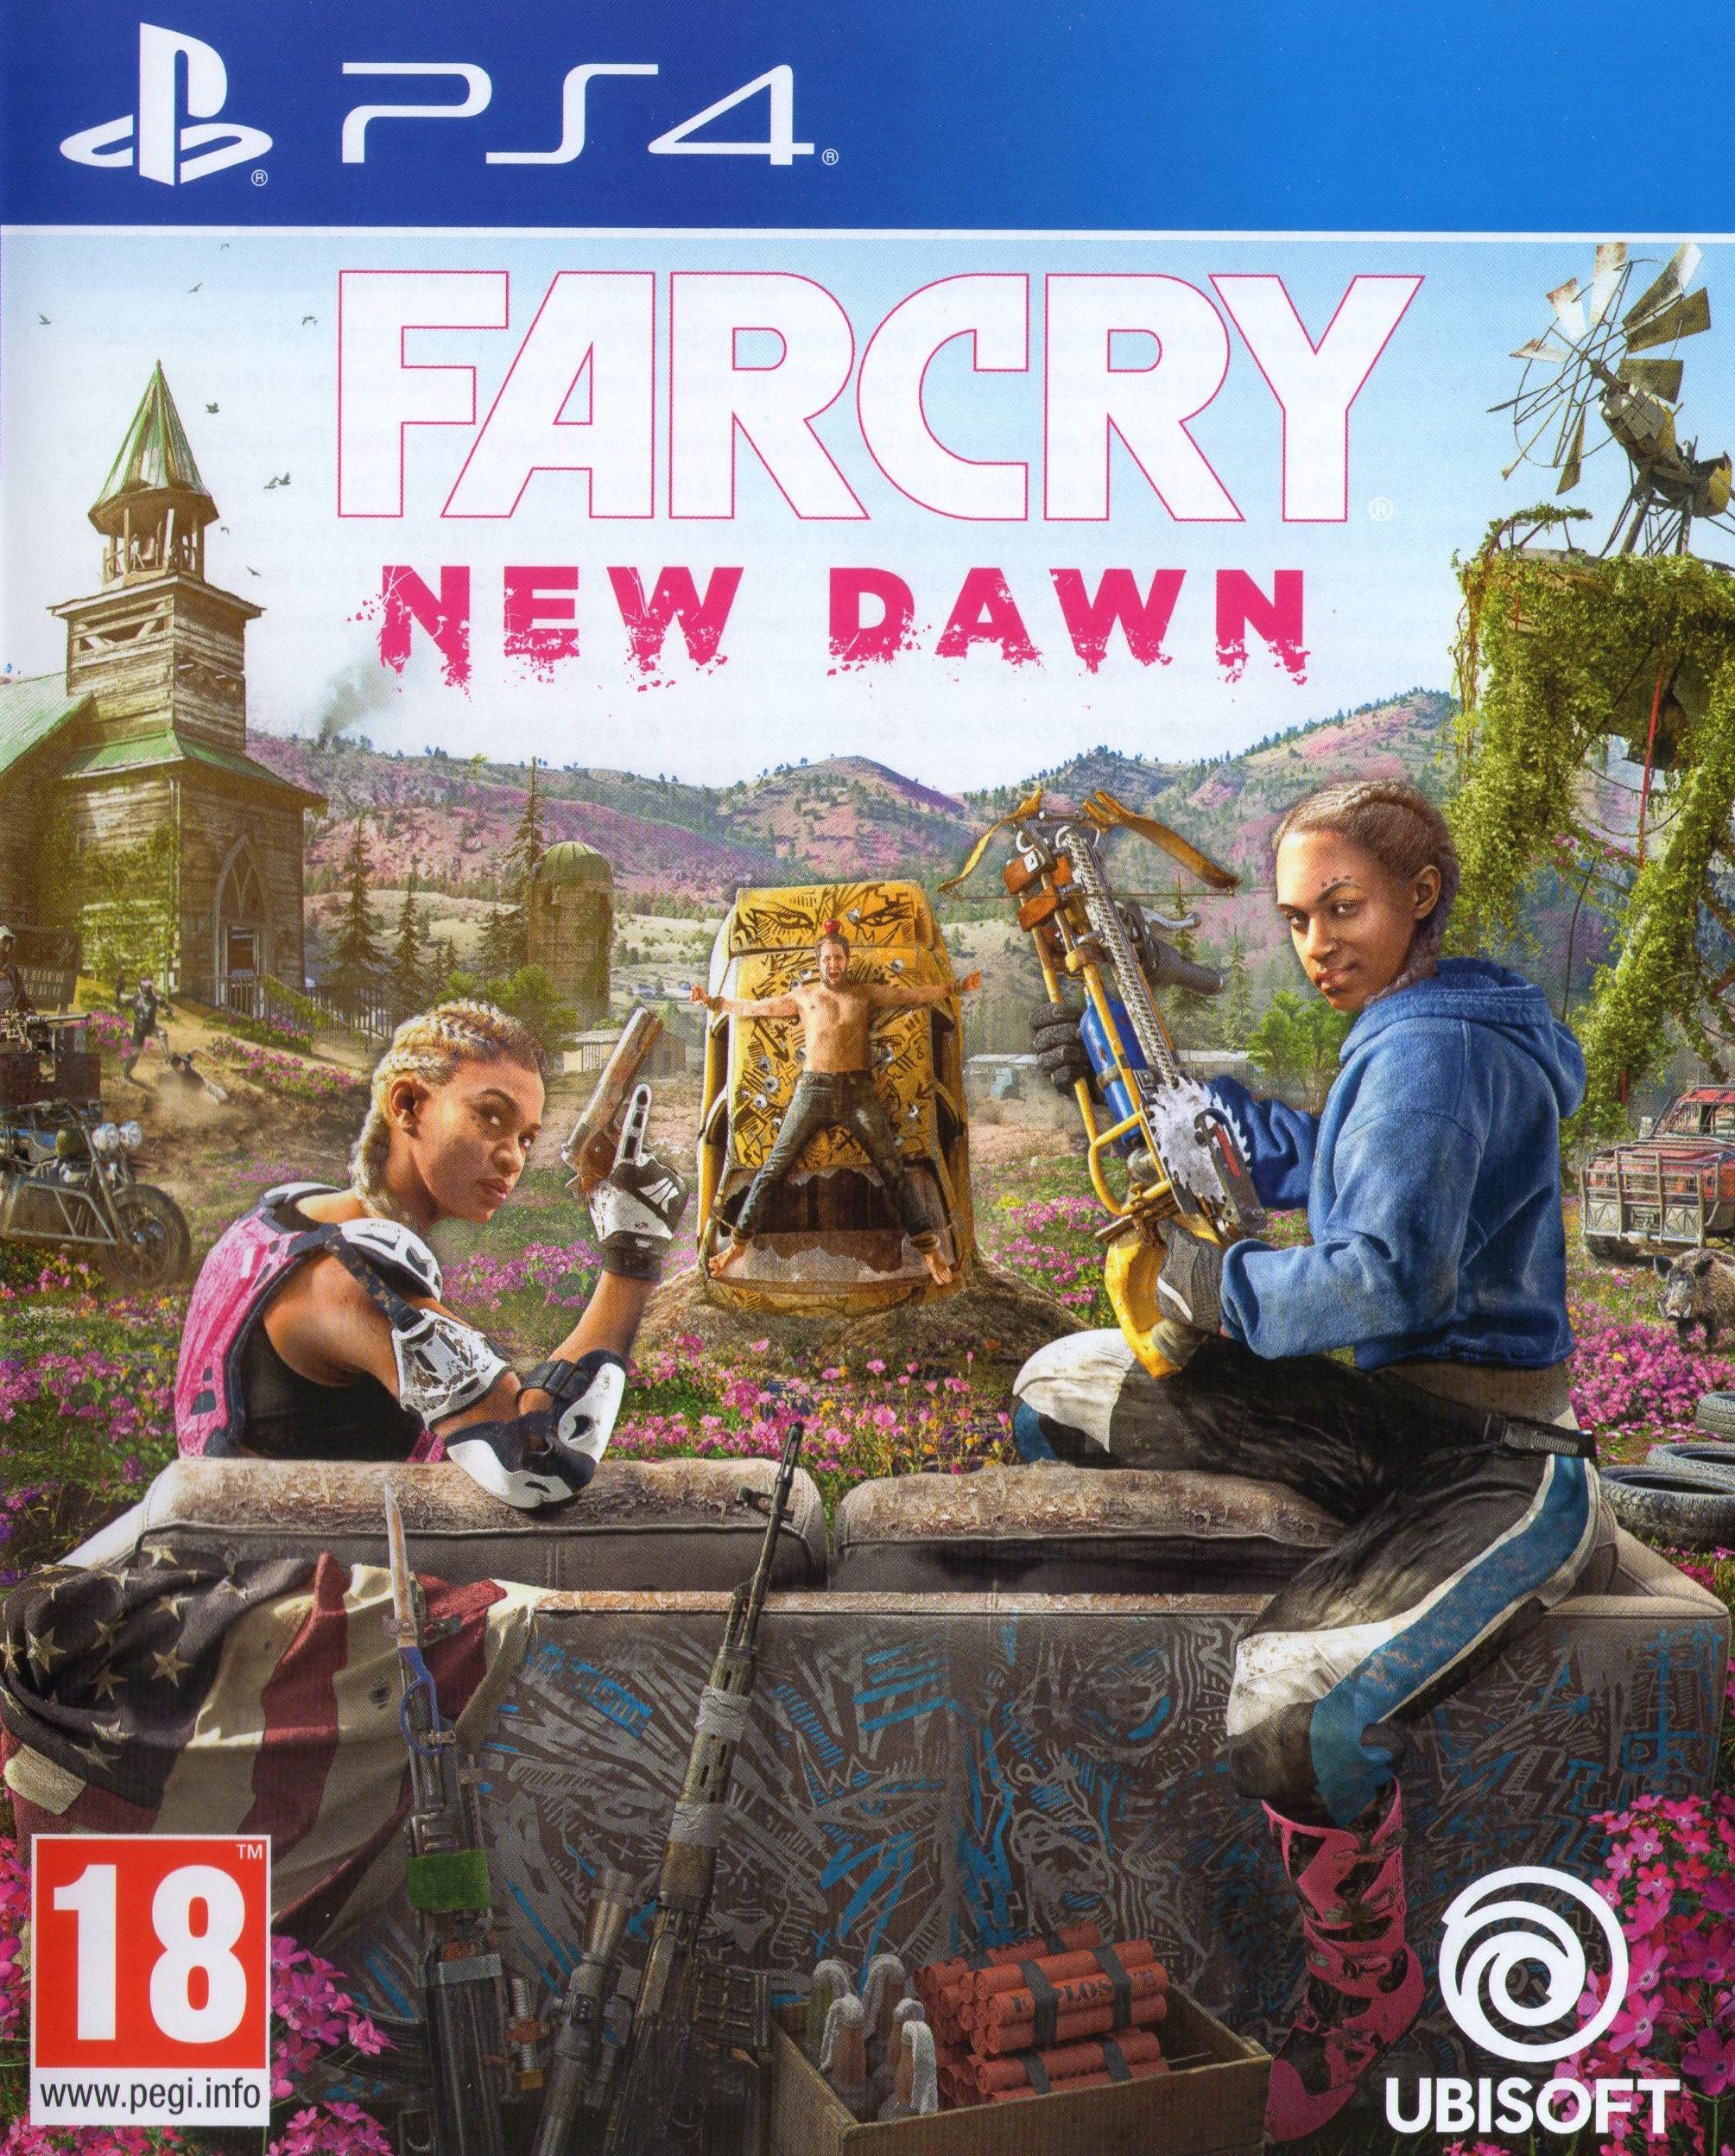 Farcry: New Dawn PS4 (New)